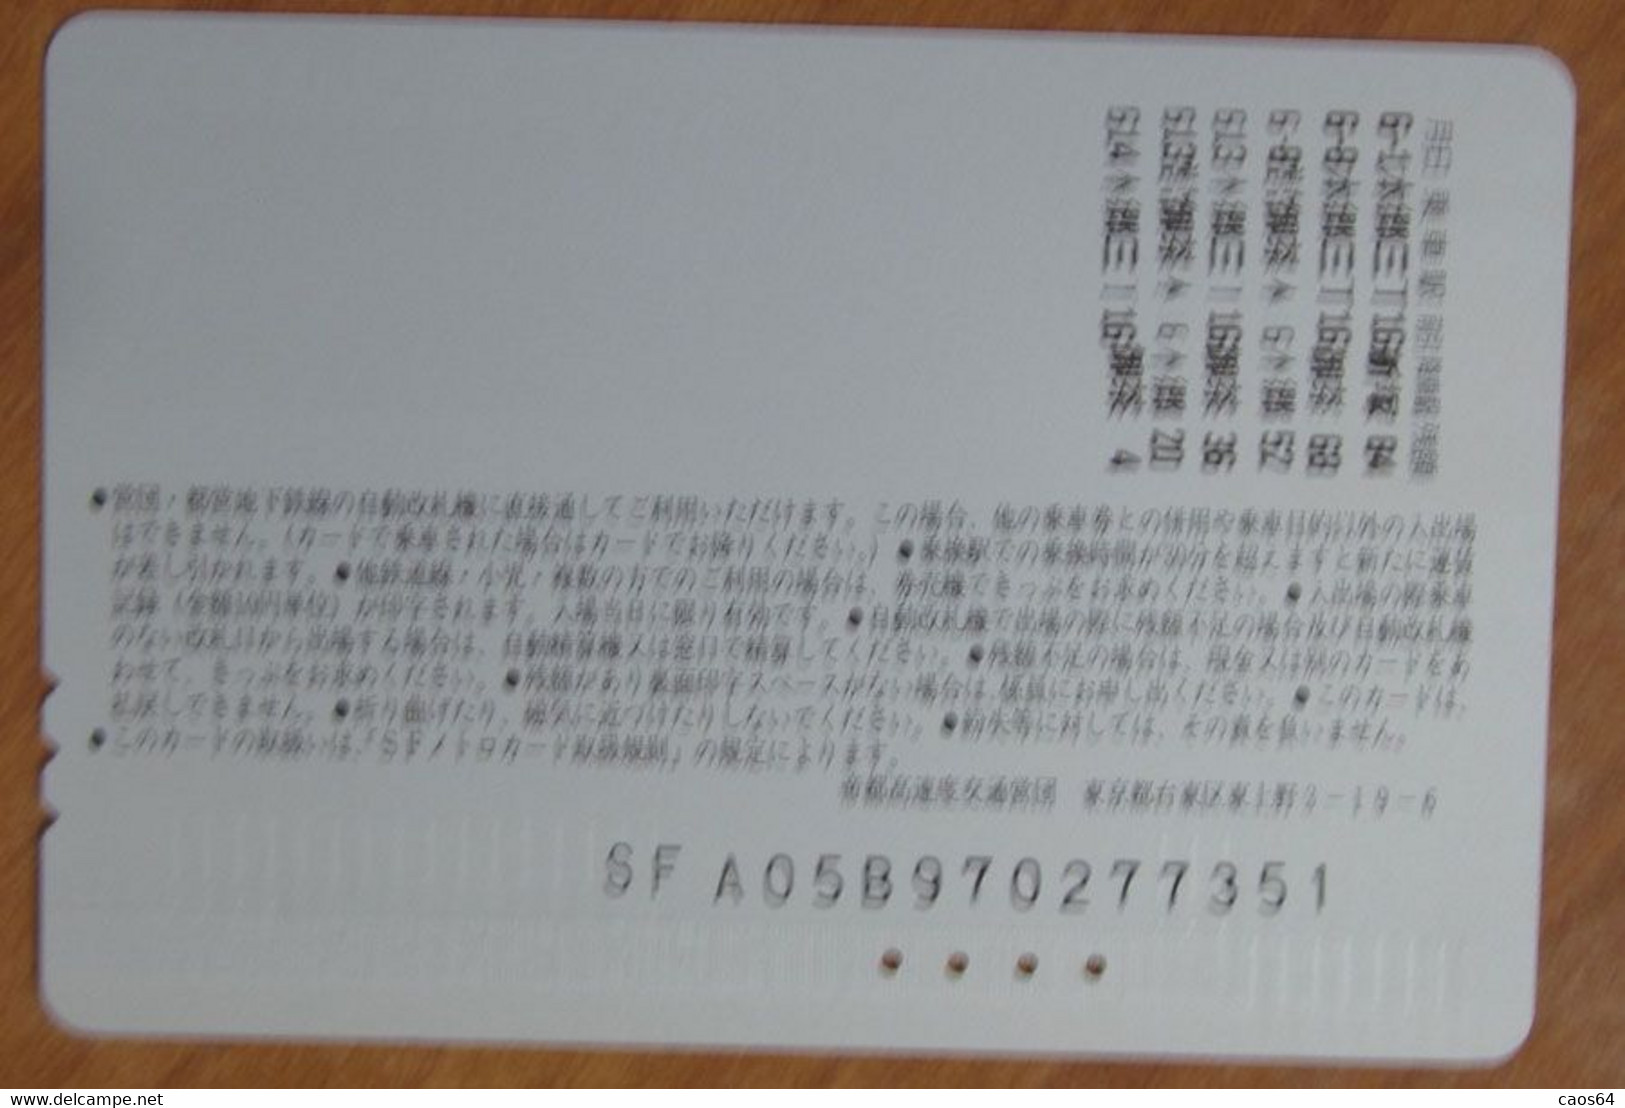 GIAPPONE Ticket Biglietto Treni Metro Bus - Arte Painting Lady Railway SF Card 1000 ¥ - Usato - Monde